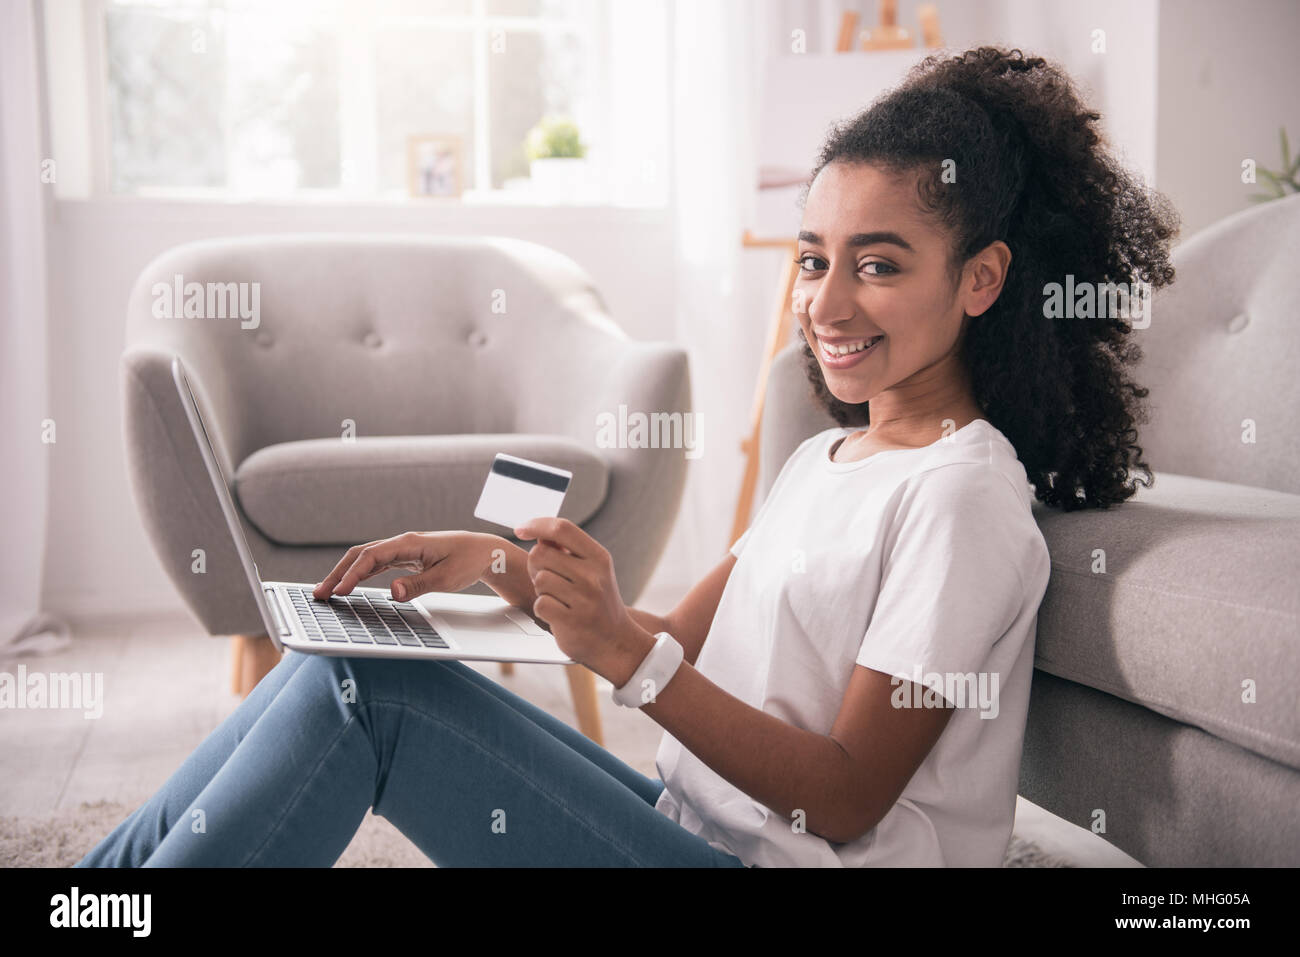 Cheerful happy woman using Internet banking Stock Photo